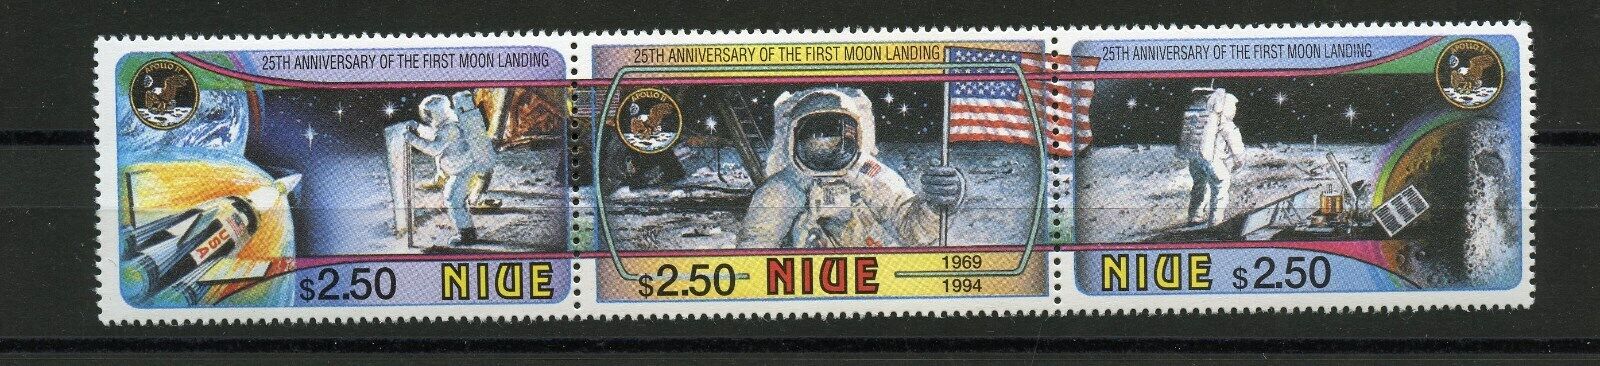 Niue Scott #668 25th Moon Landing Anniversary Apollo 11 Set Mint Never Hinged